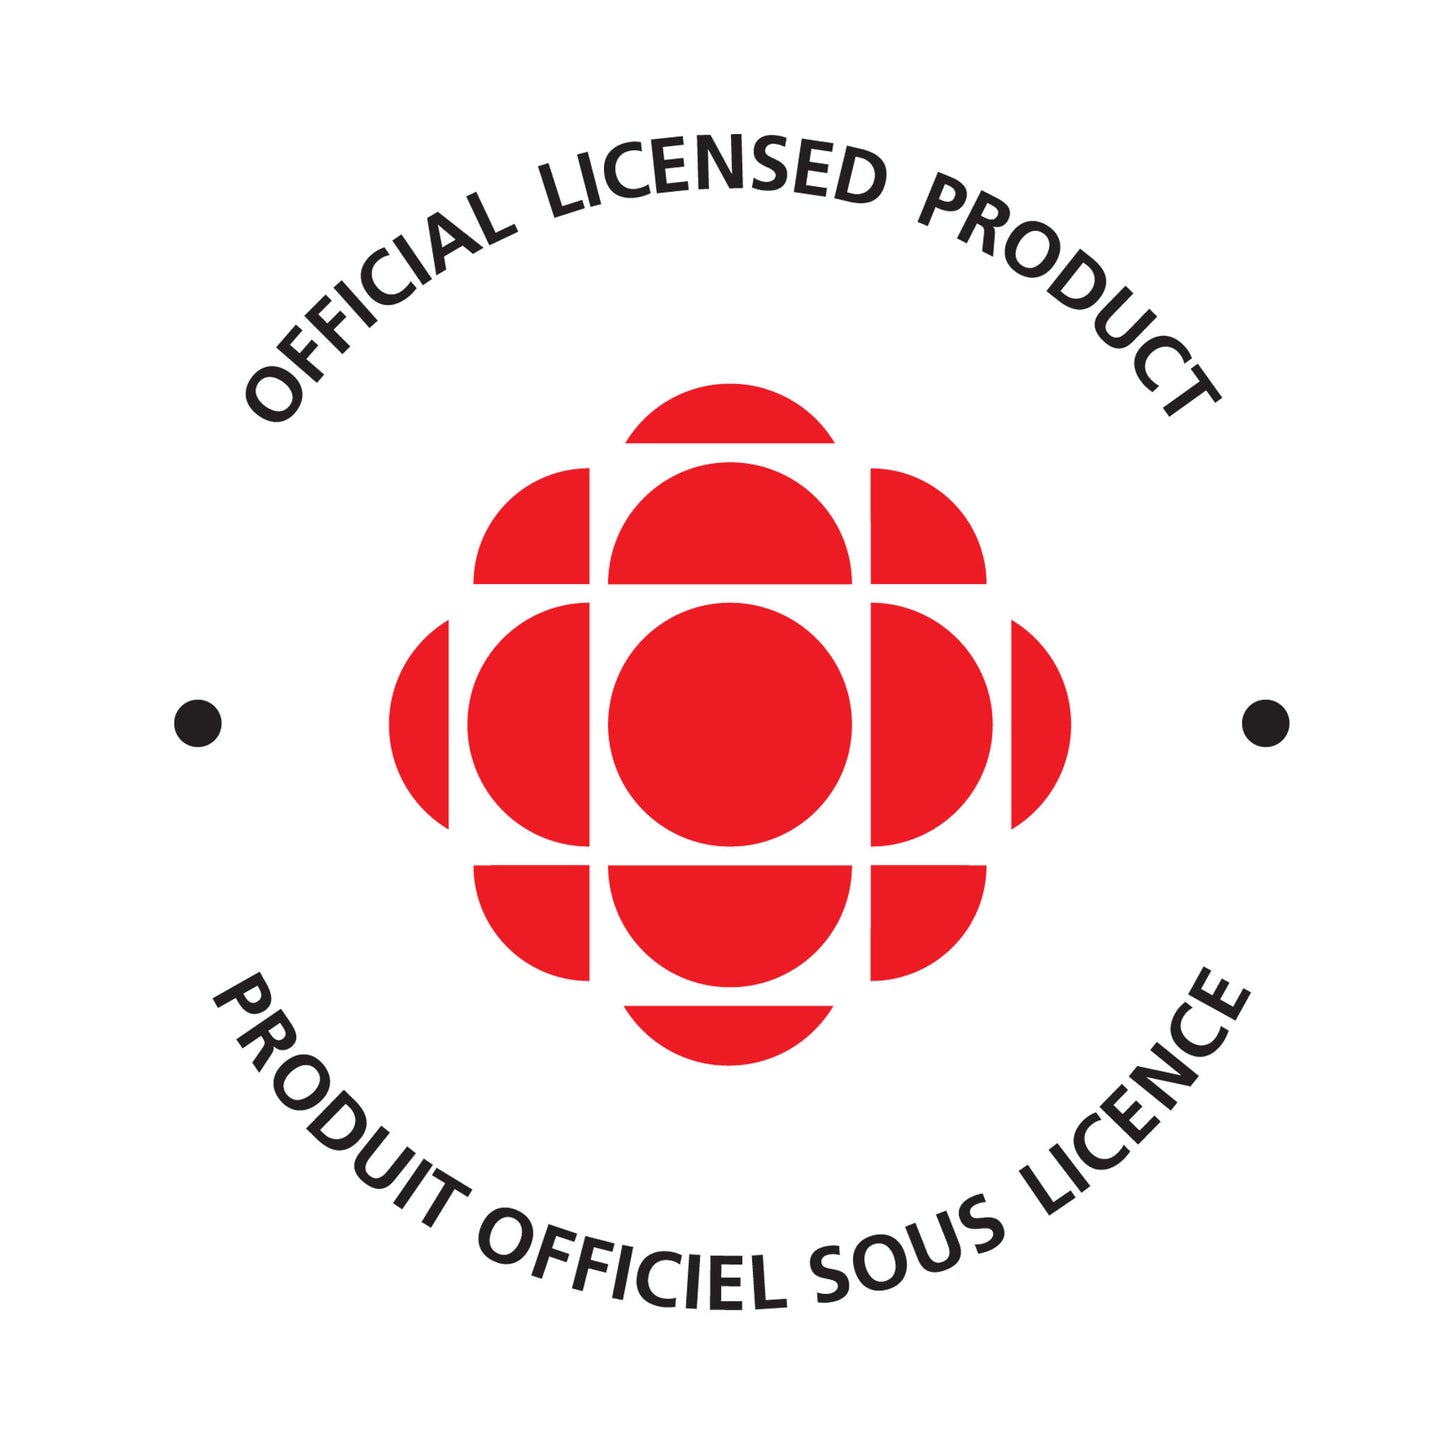 K9 Crystal Ornament - CBC 1974-1986 logo [on Blue Background]